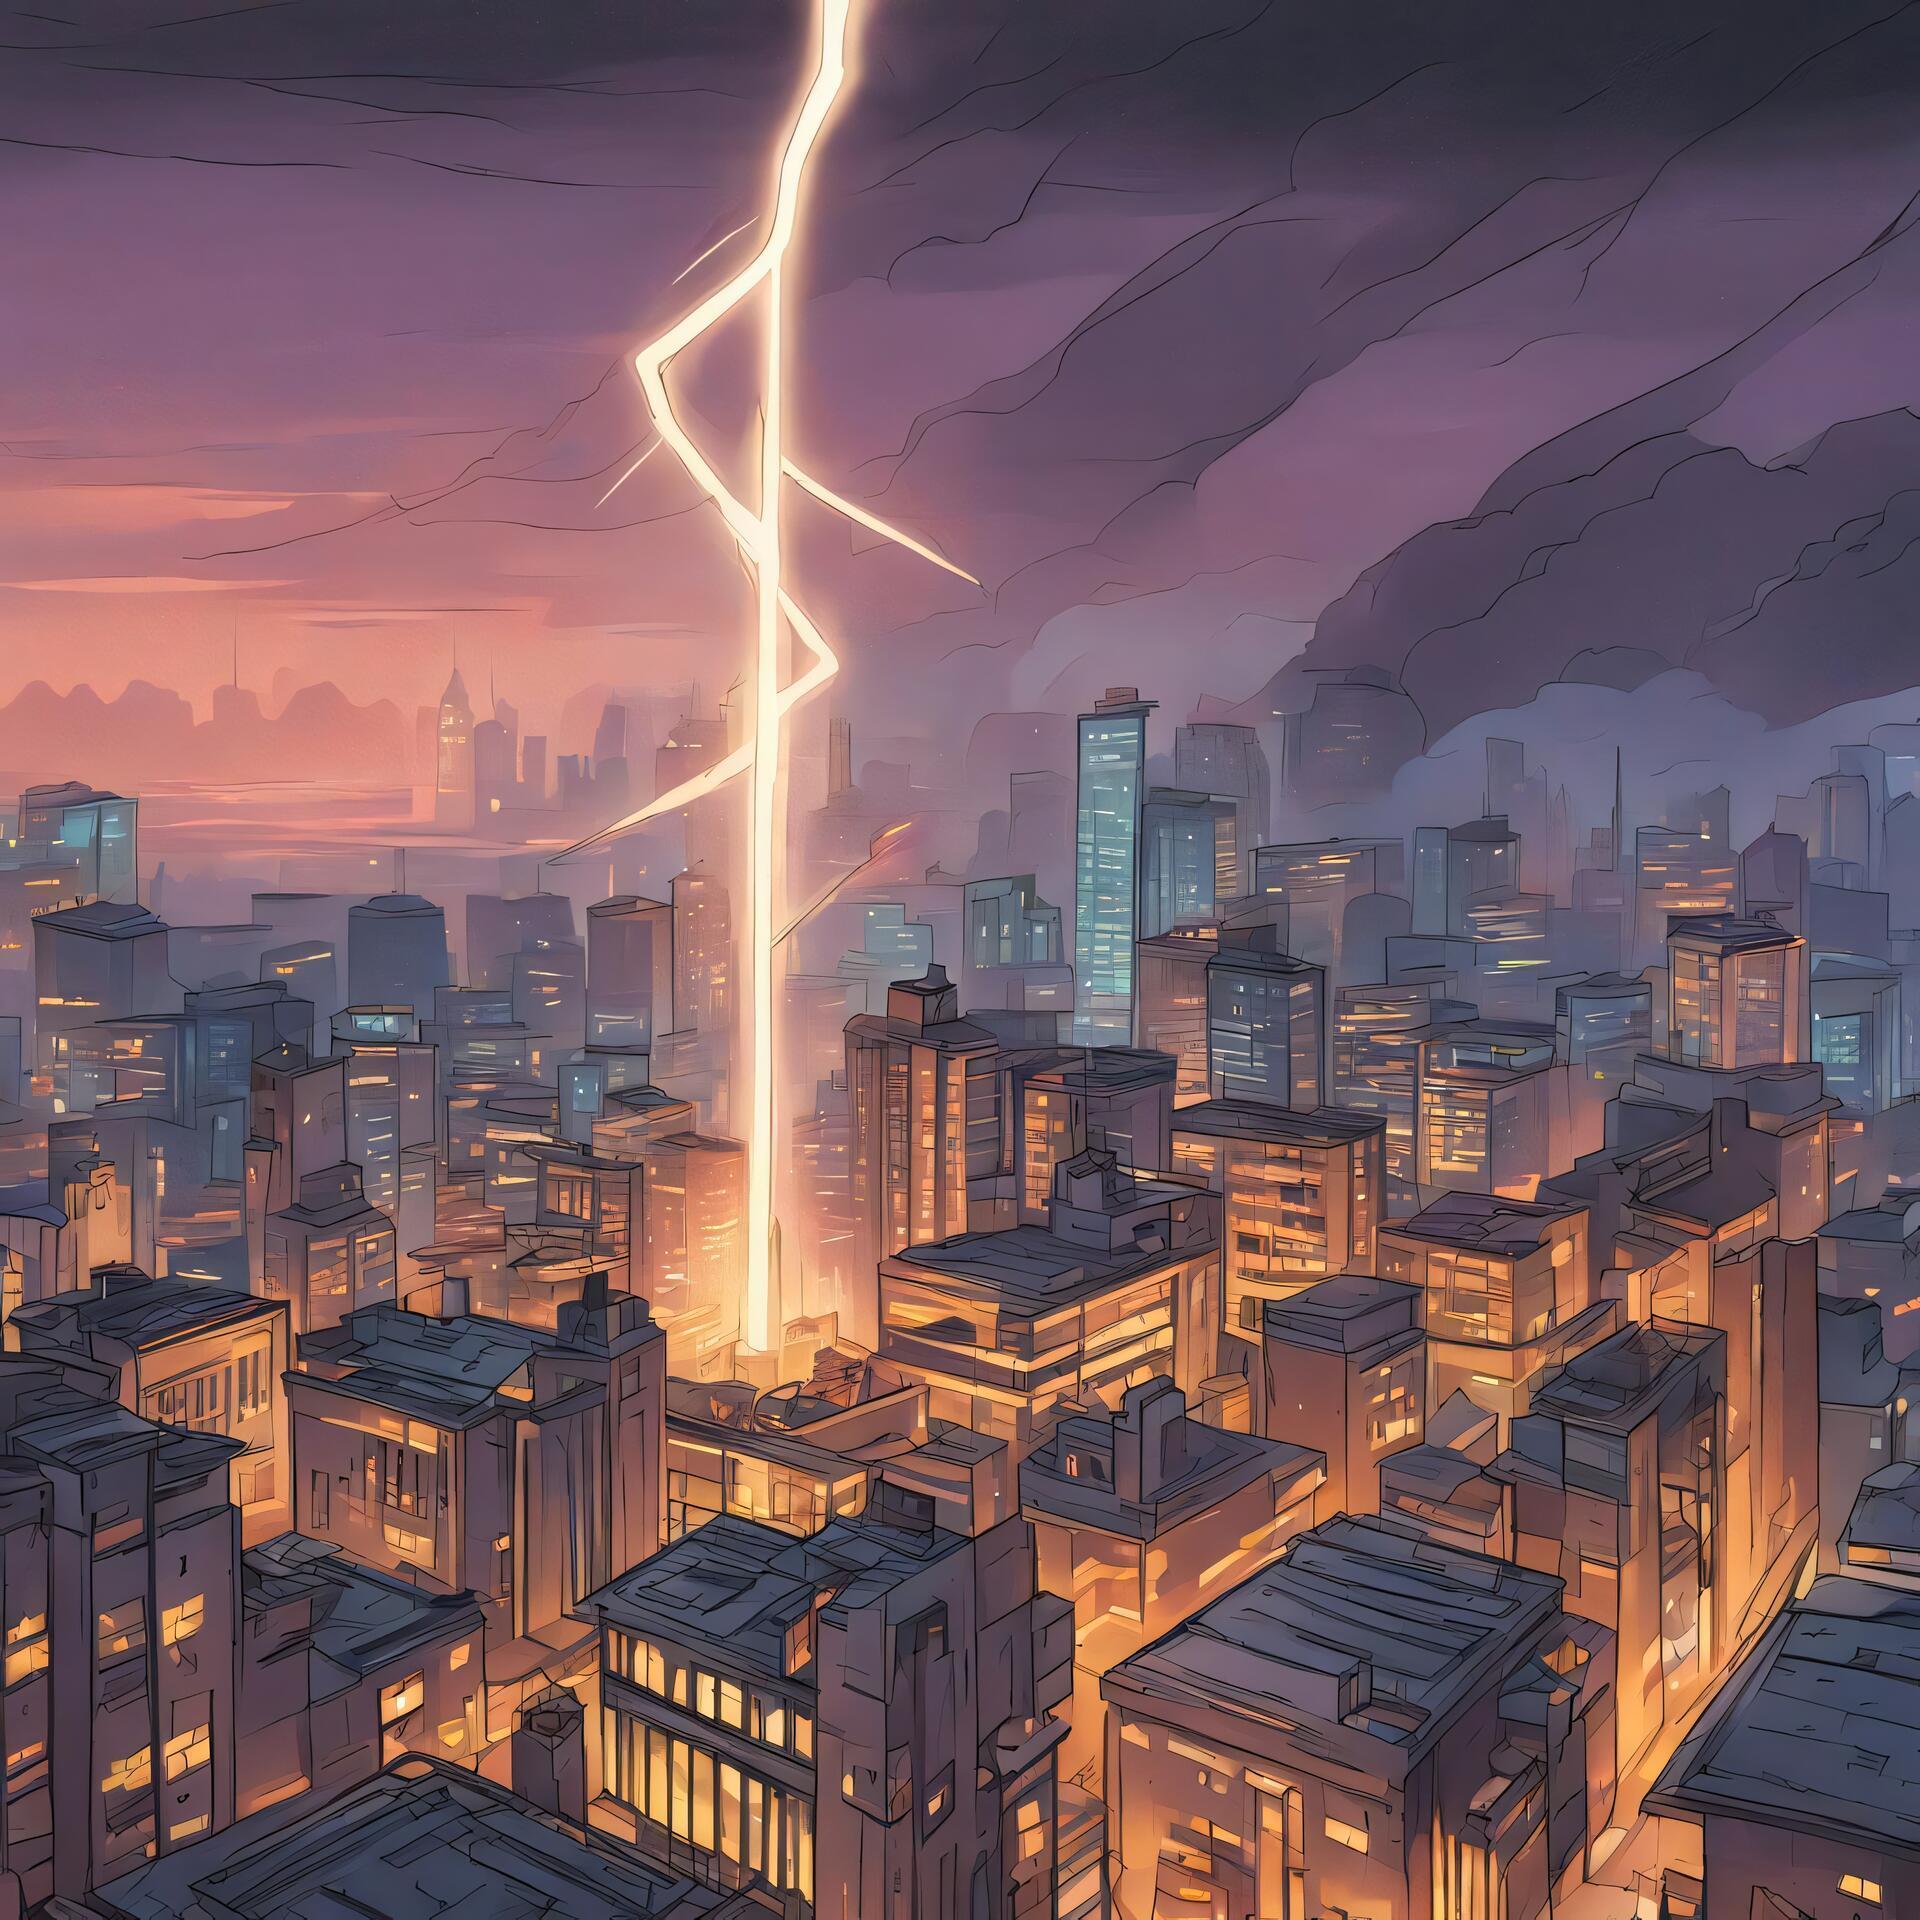 A cartoon drawing showing a lightning strike hitting a lightning rod in a futuristic city.